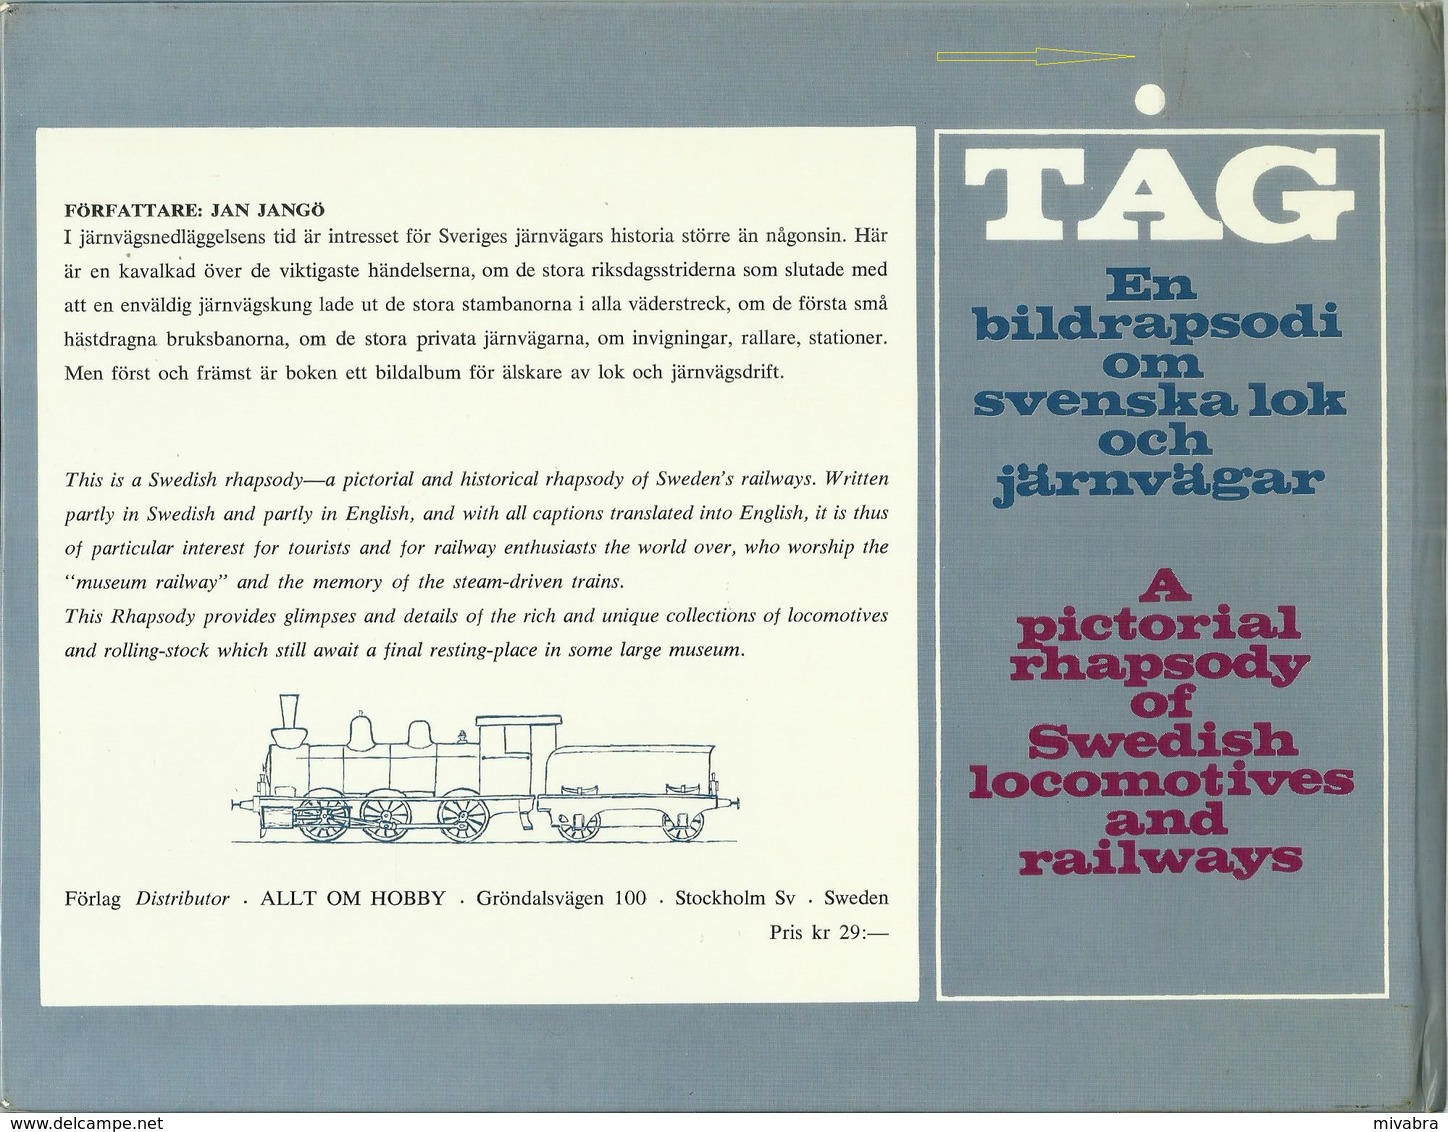 TÅG EN BILDRAPSODI OM SVENSKA LOK - A PICTORIAL RHAPSODY OF SWEDISH LOCOMOTIVES AND RAILWAYS (EISENBAHN CHEMIN DE FER ) - Chemin De Fer